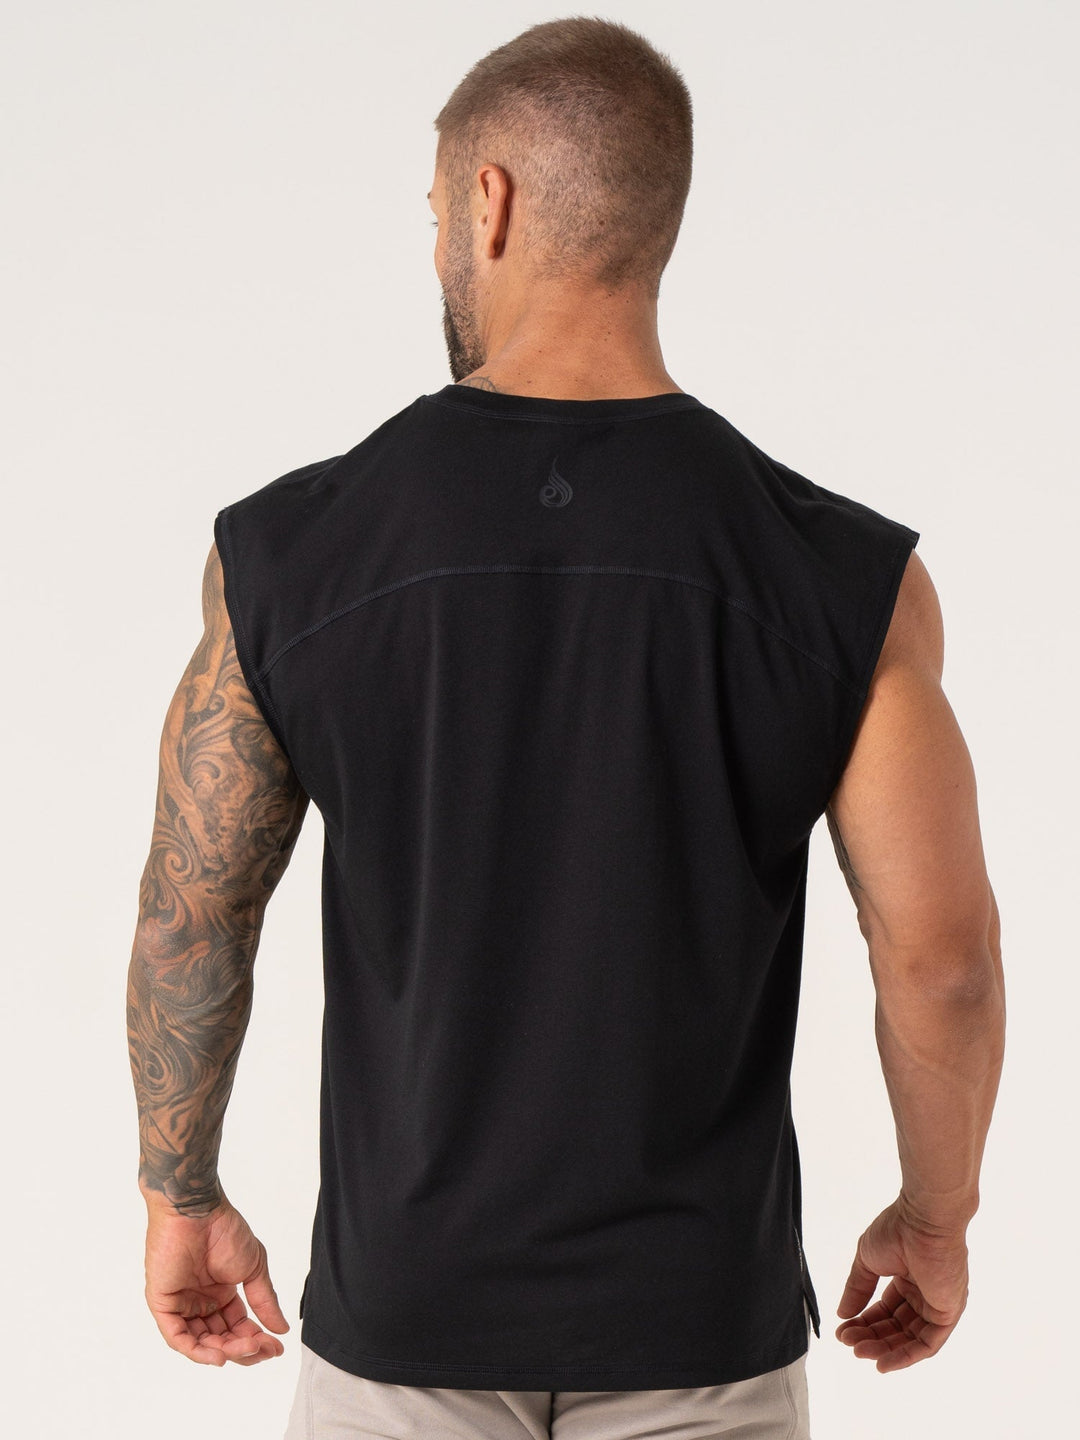 Pursuit Muscle Tank - Black Clothing Ryderwear 